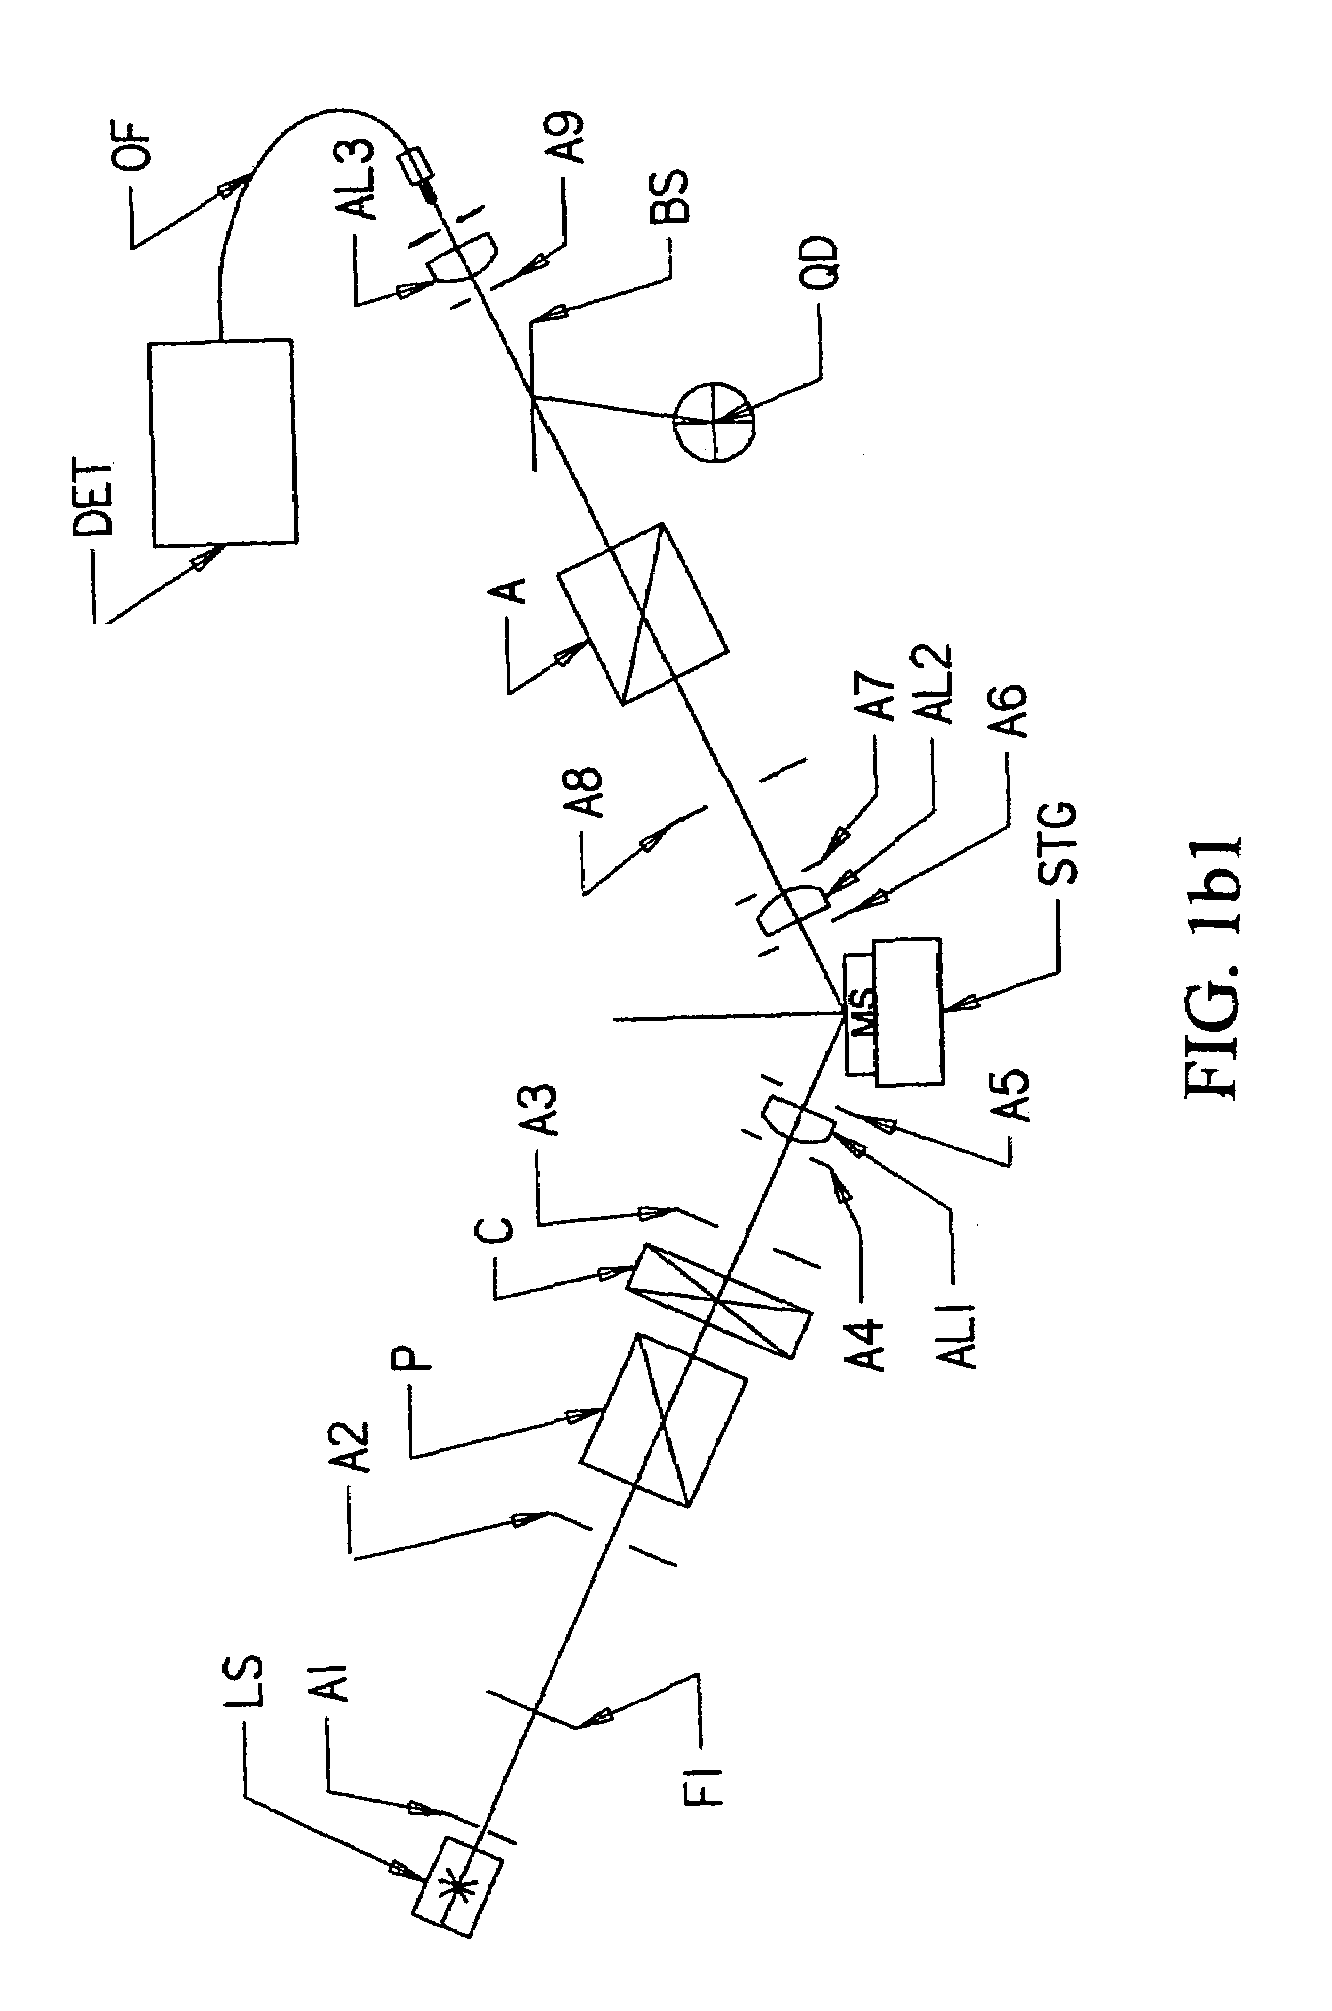 Spectroscopic ellipsometer and polarimeter systems